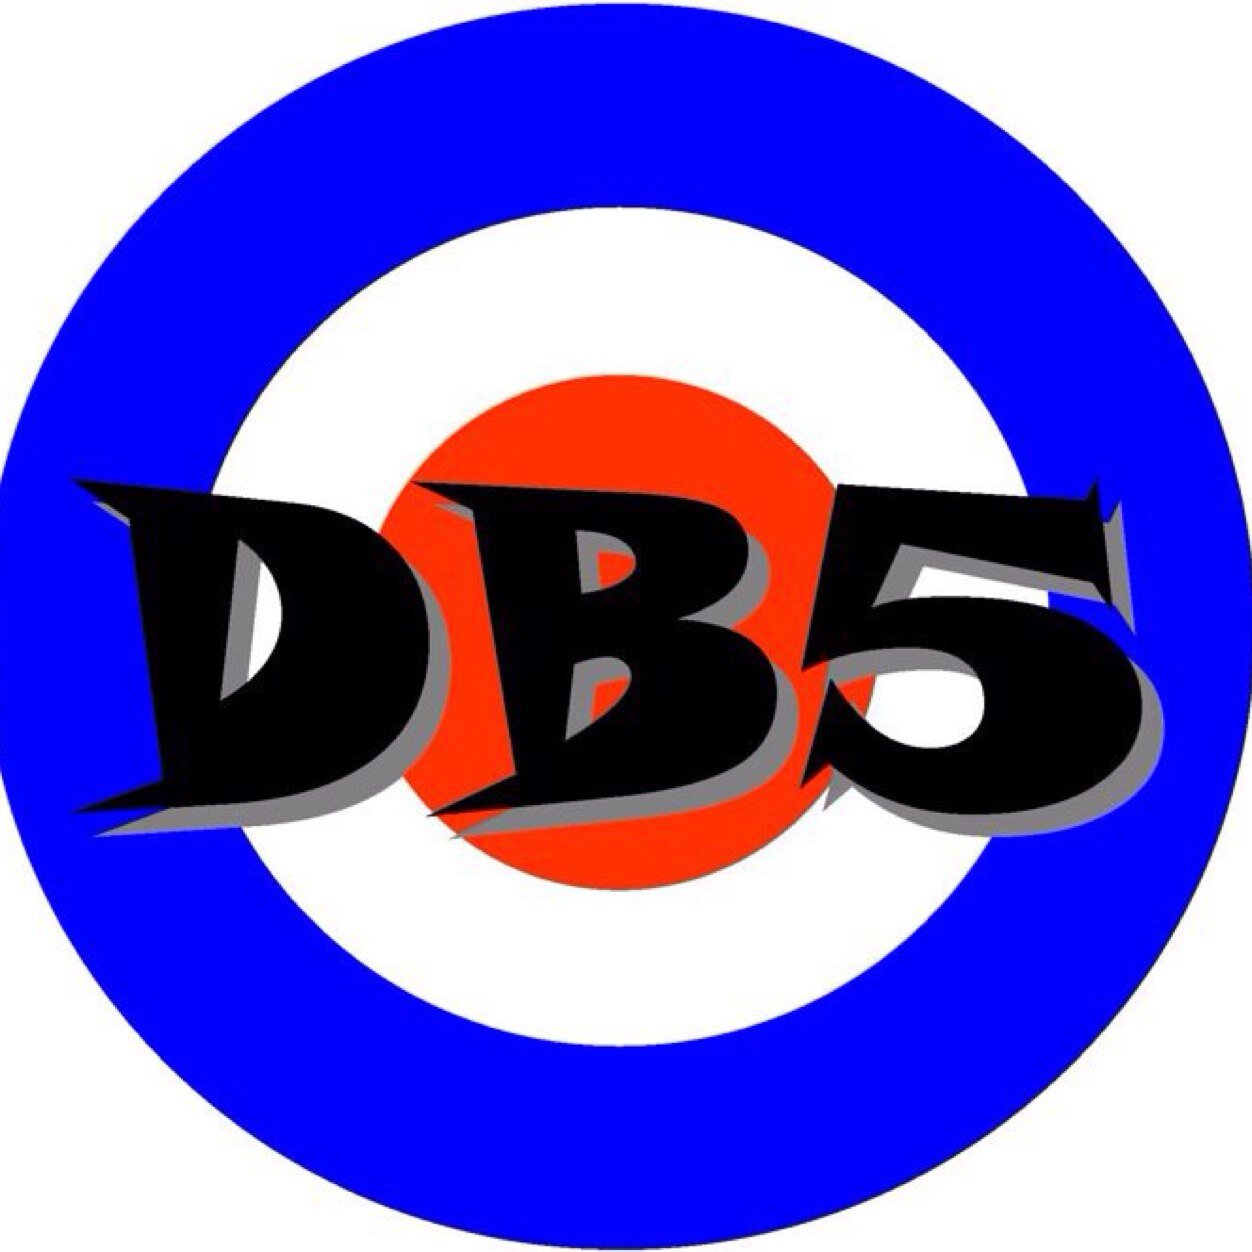 DB5 is
Steve Harrison - vocals, guitar, keys
Mark Pipe - Bass & vocals
John Holliday - drums